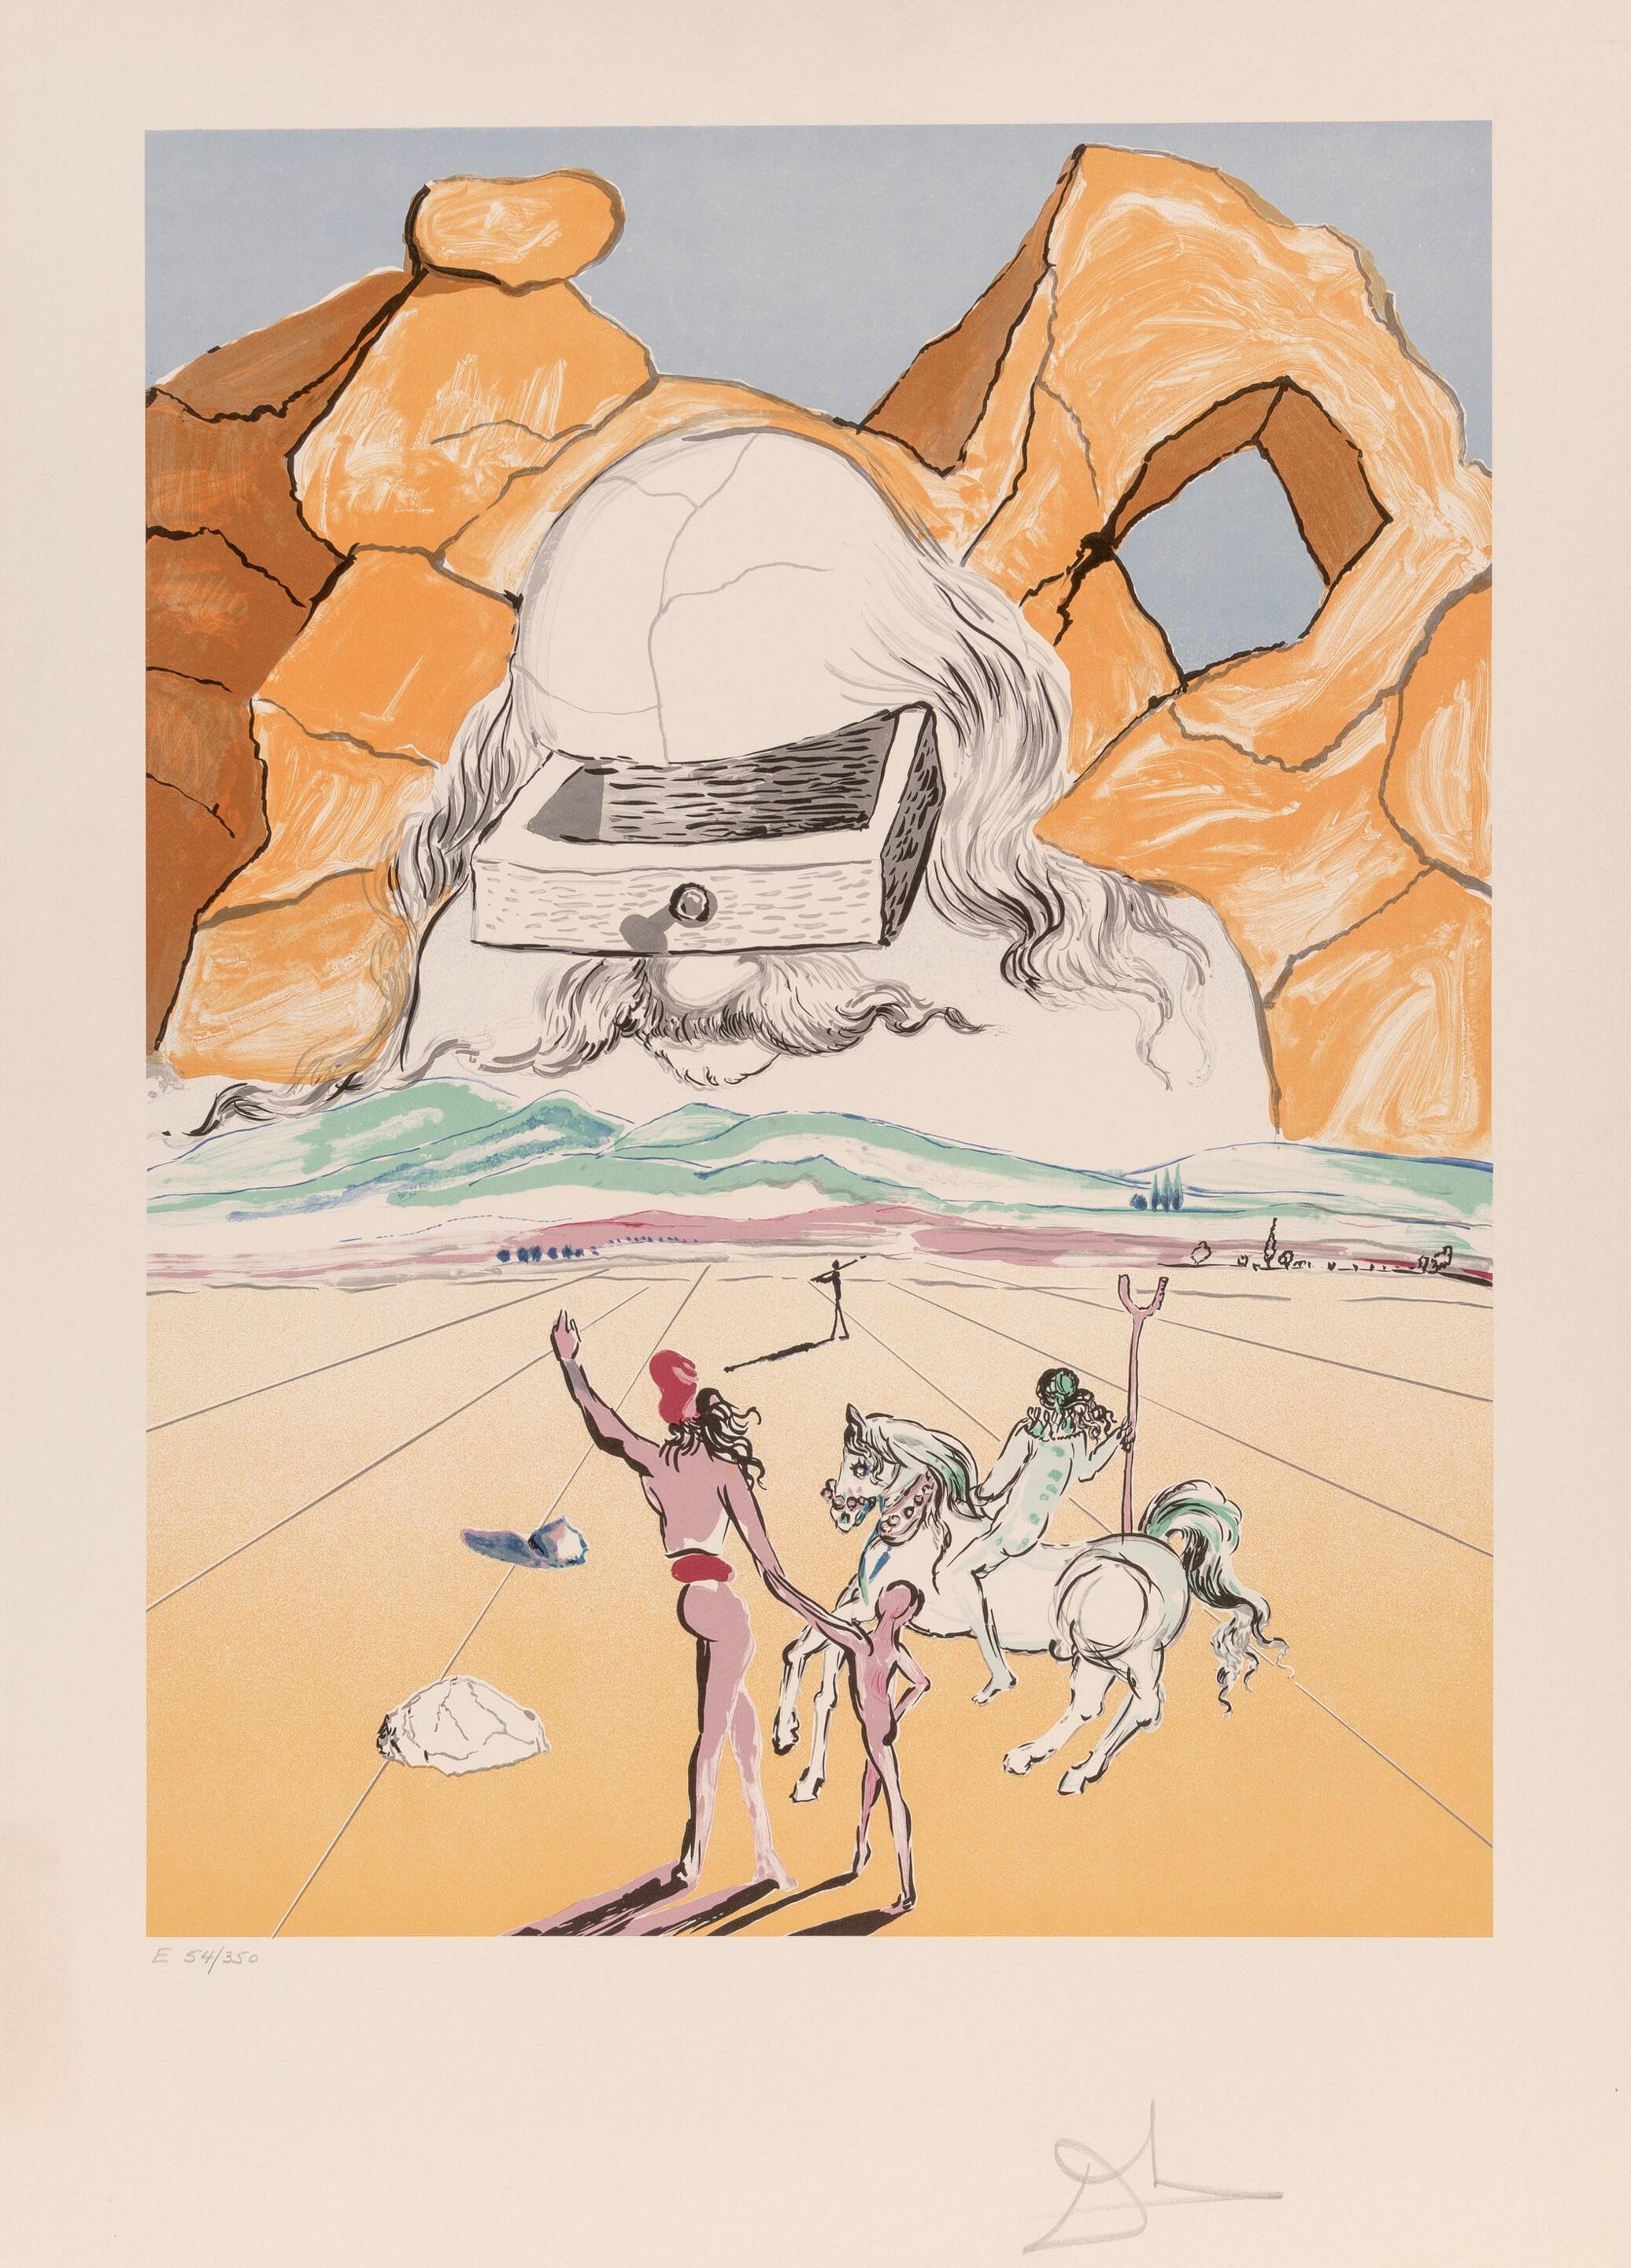 The path to wisdom, from Retrospective - Print by Salvador Dalí